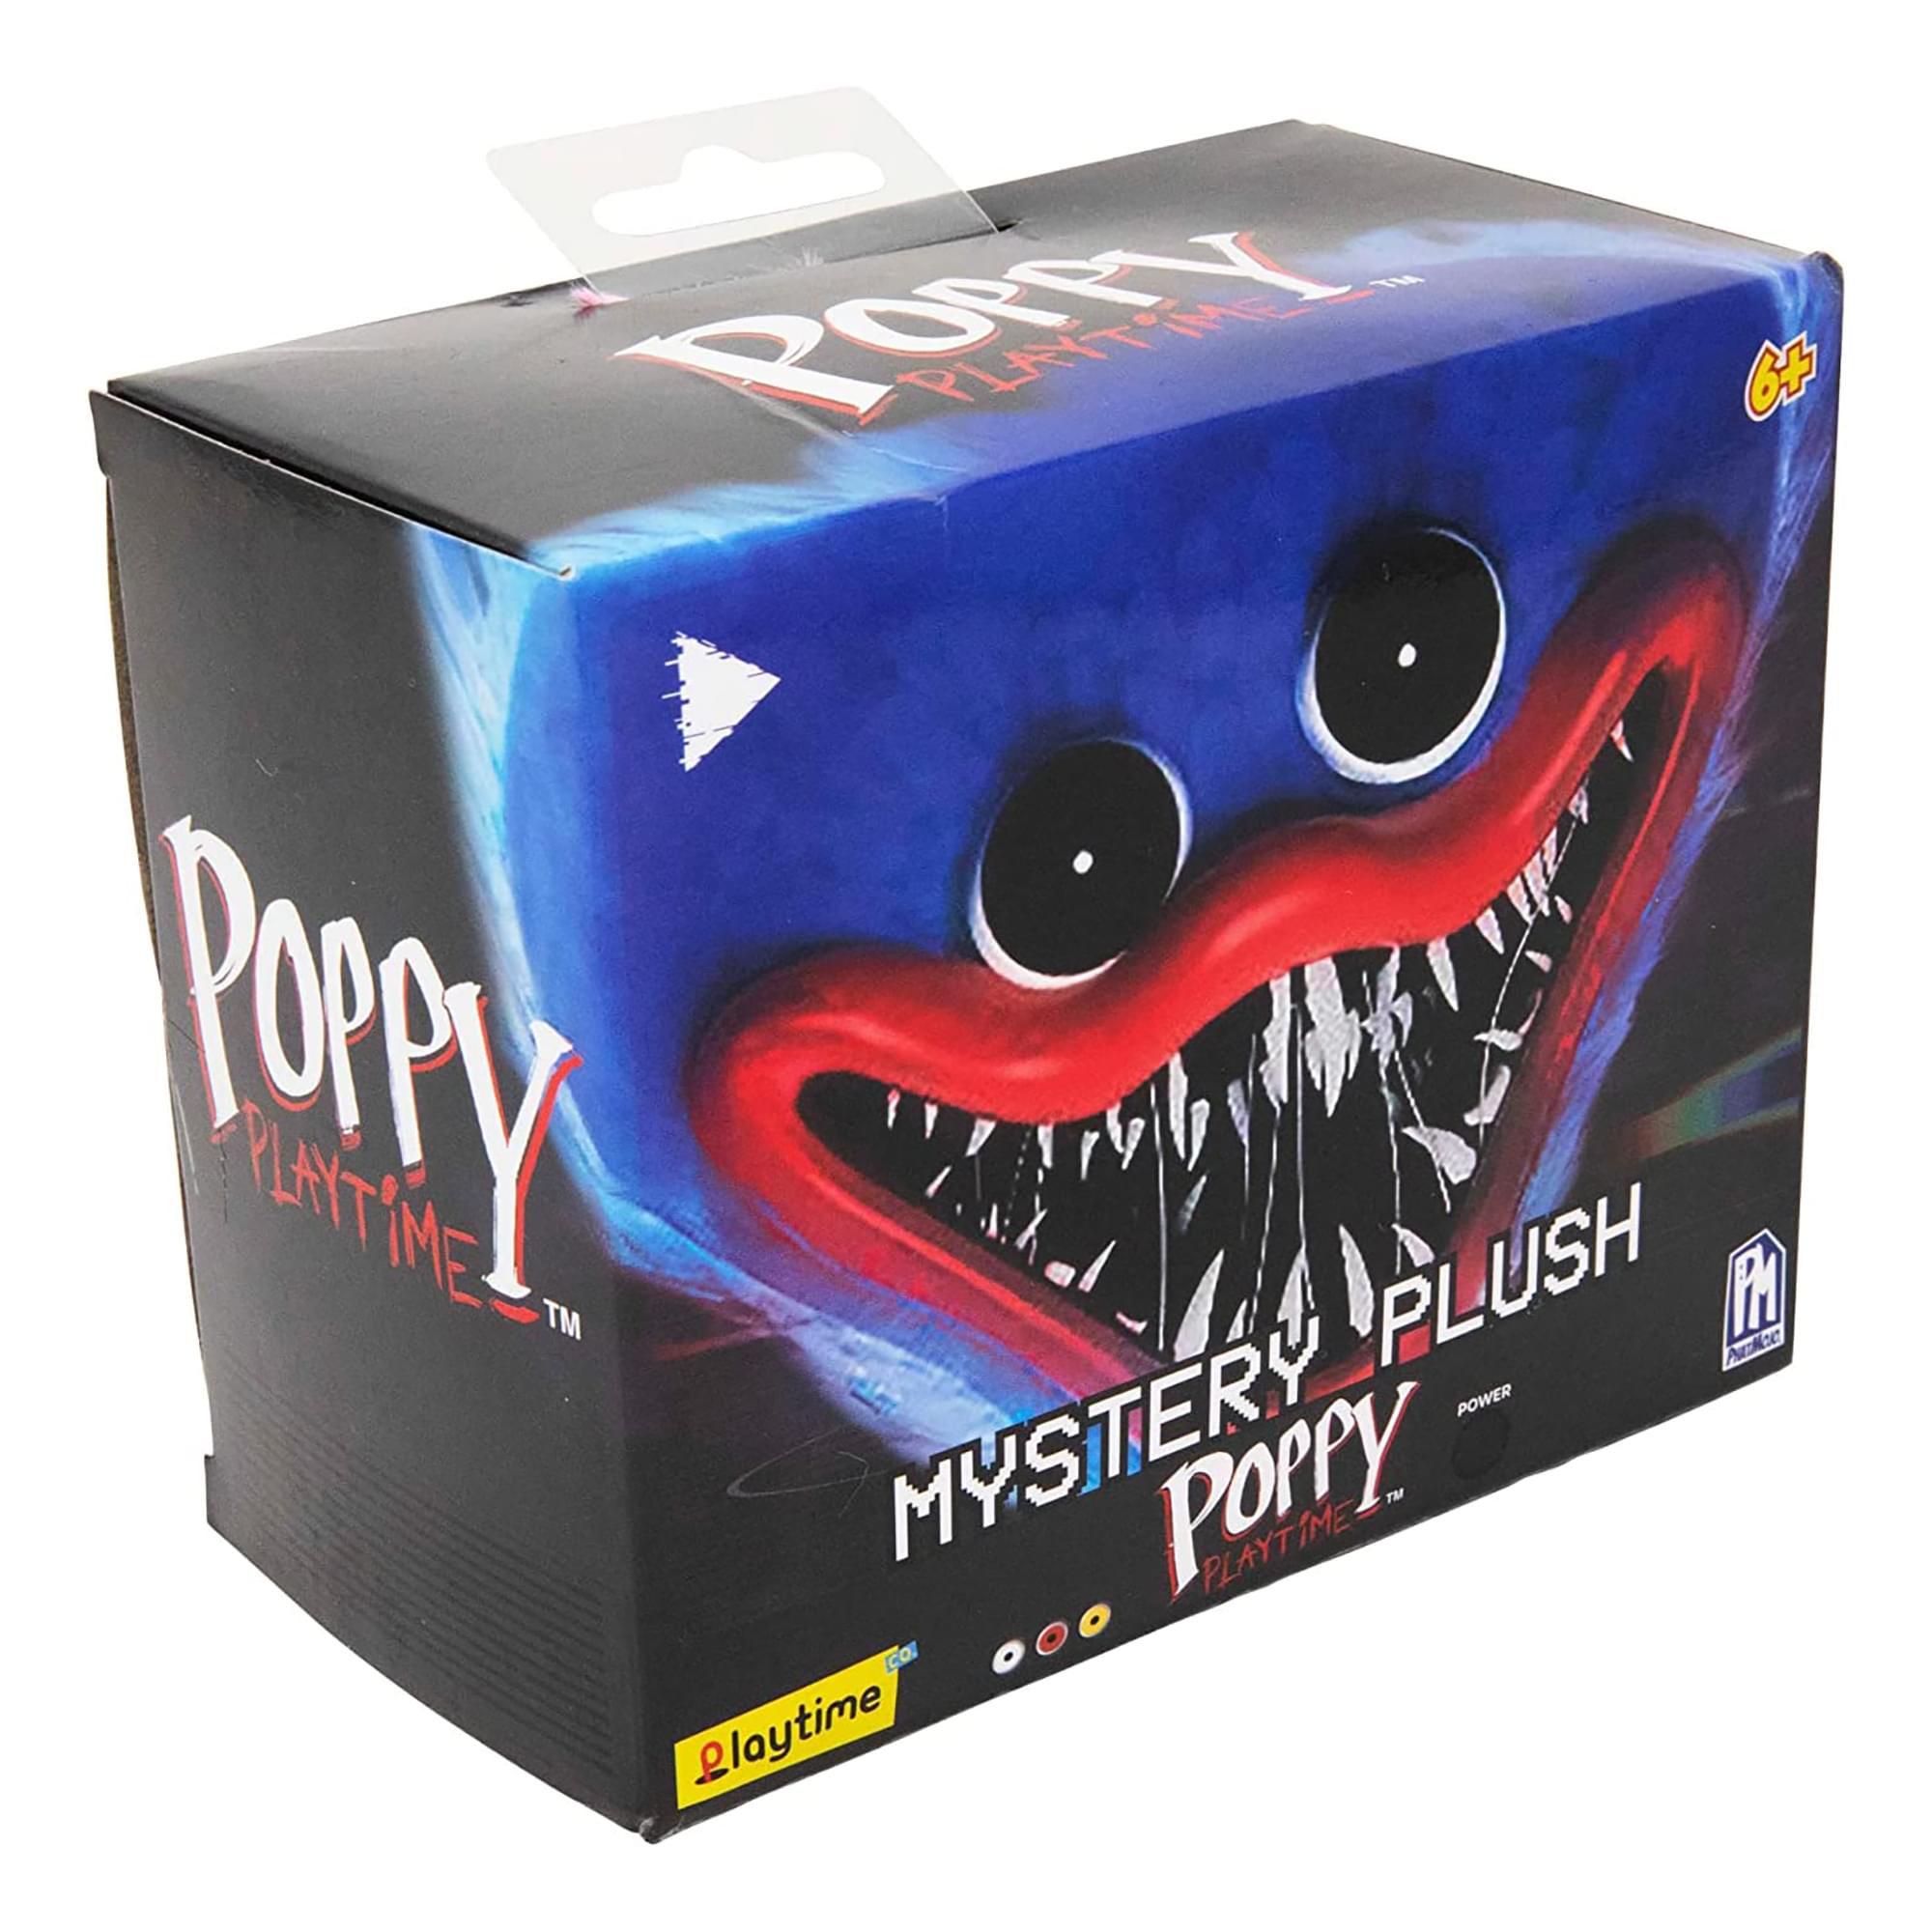 Funko Pop! Box & Pop Concept: Huggy Wuggy (Poppy Playtime)